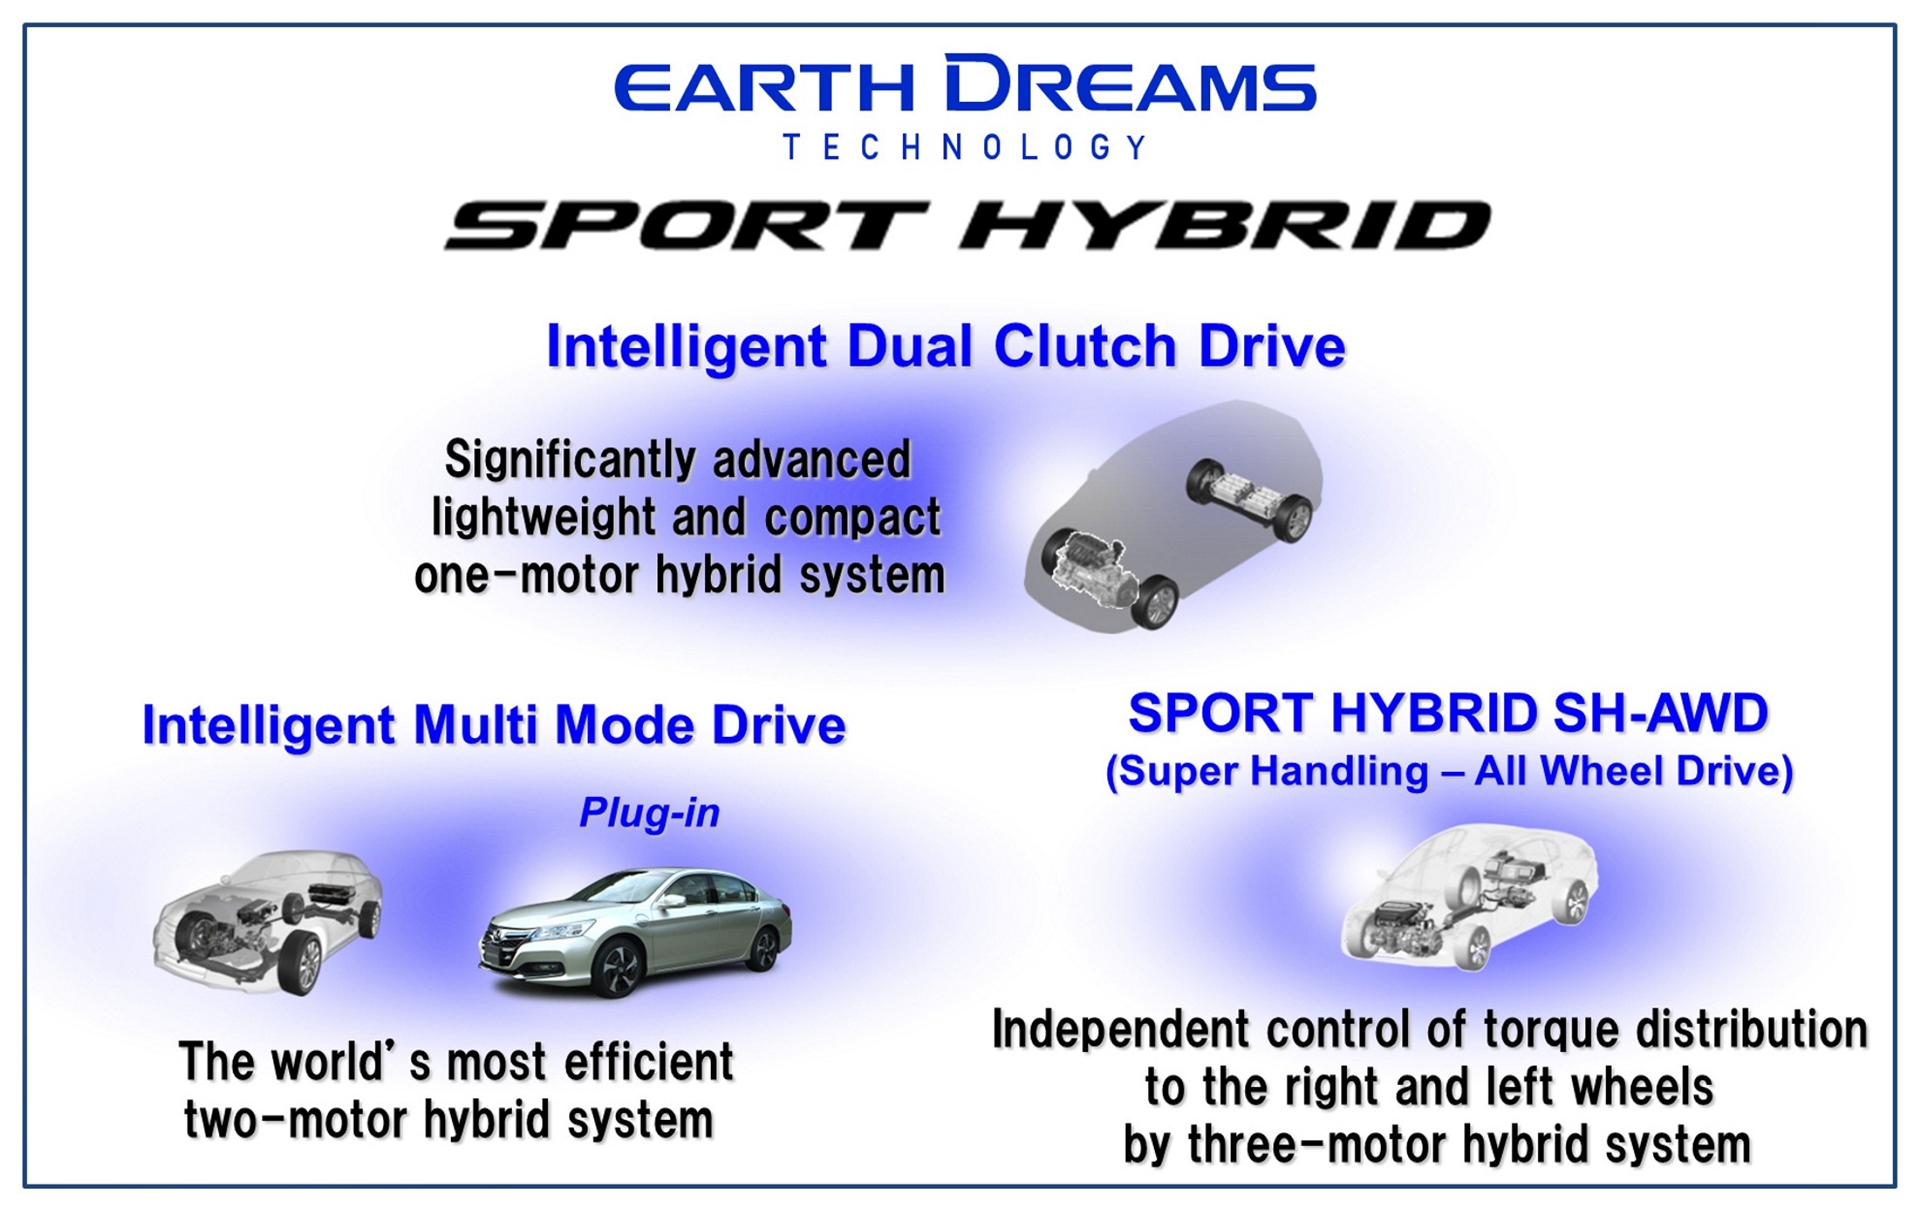 Honda Develops “SPORT HYBRID Intelligent Dual Clutch Drive” – A New Lightweight and Compact Hybrid System